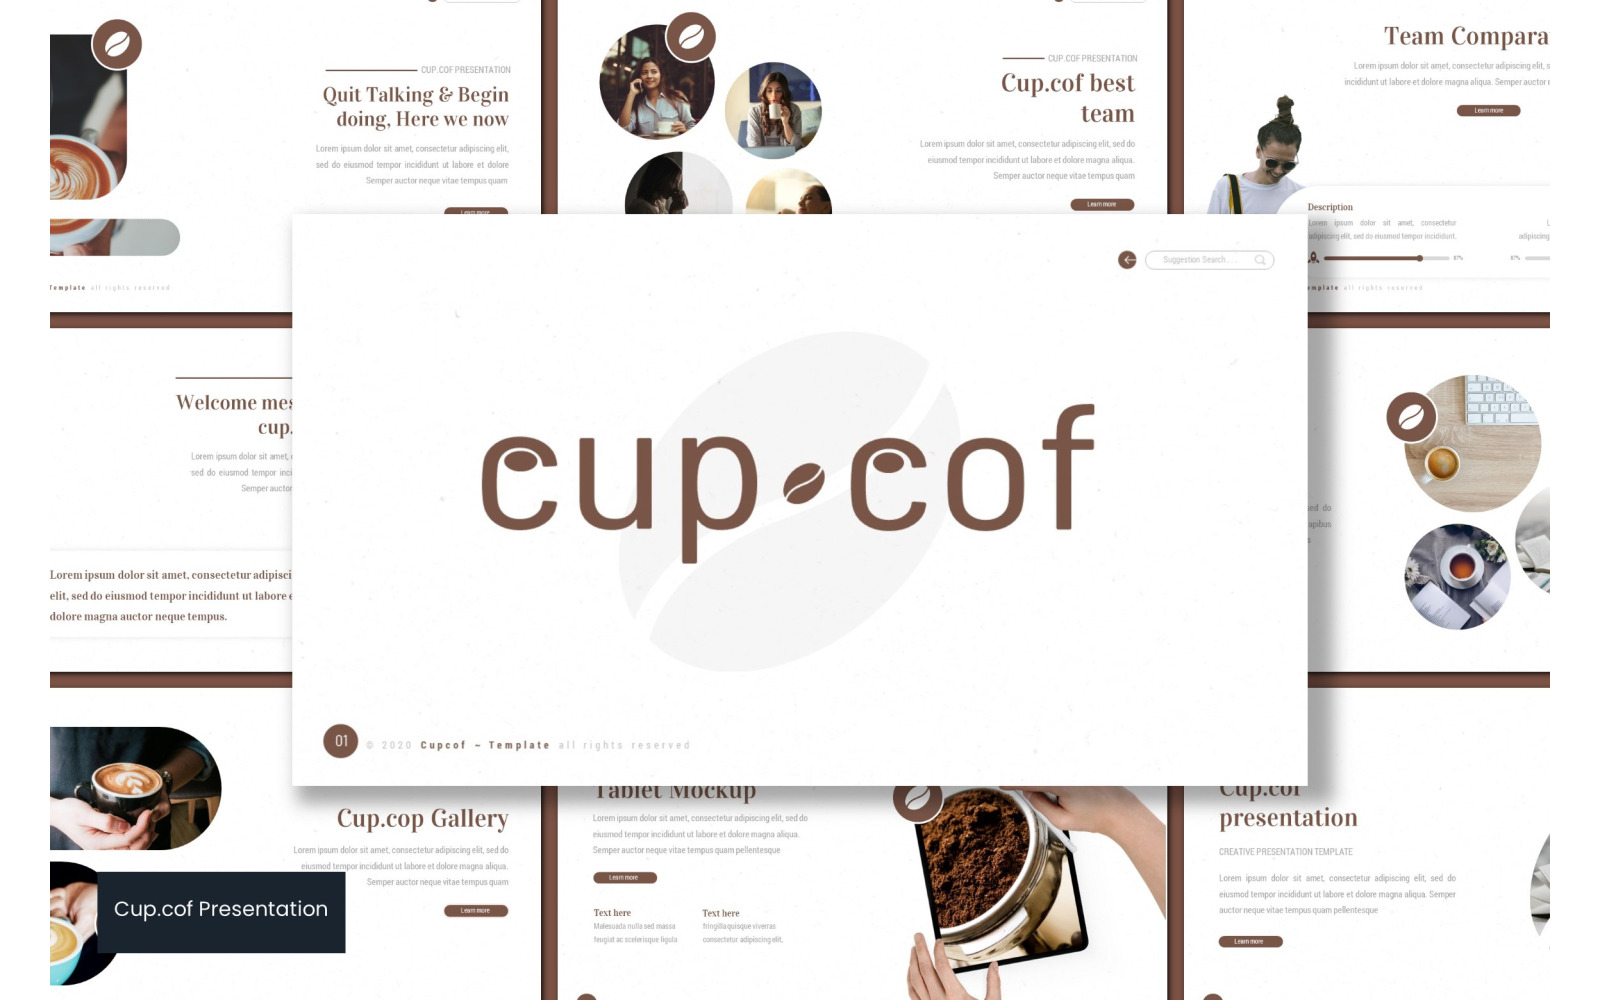 Cup.cof Google Slides